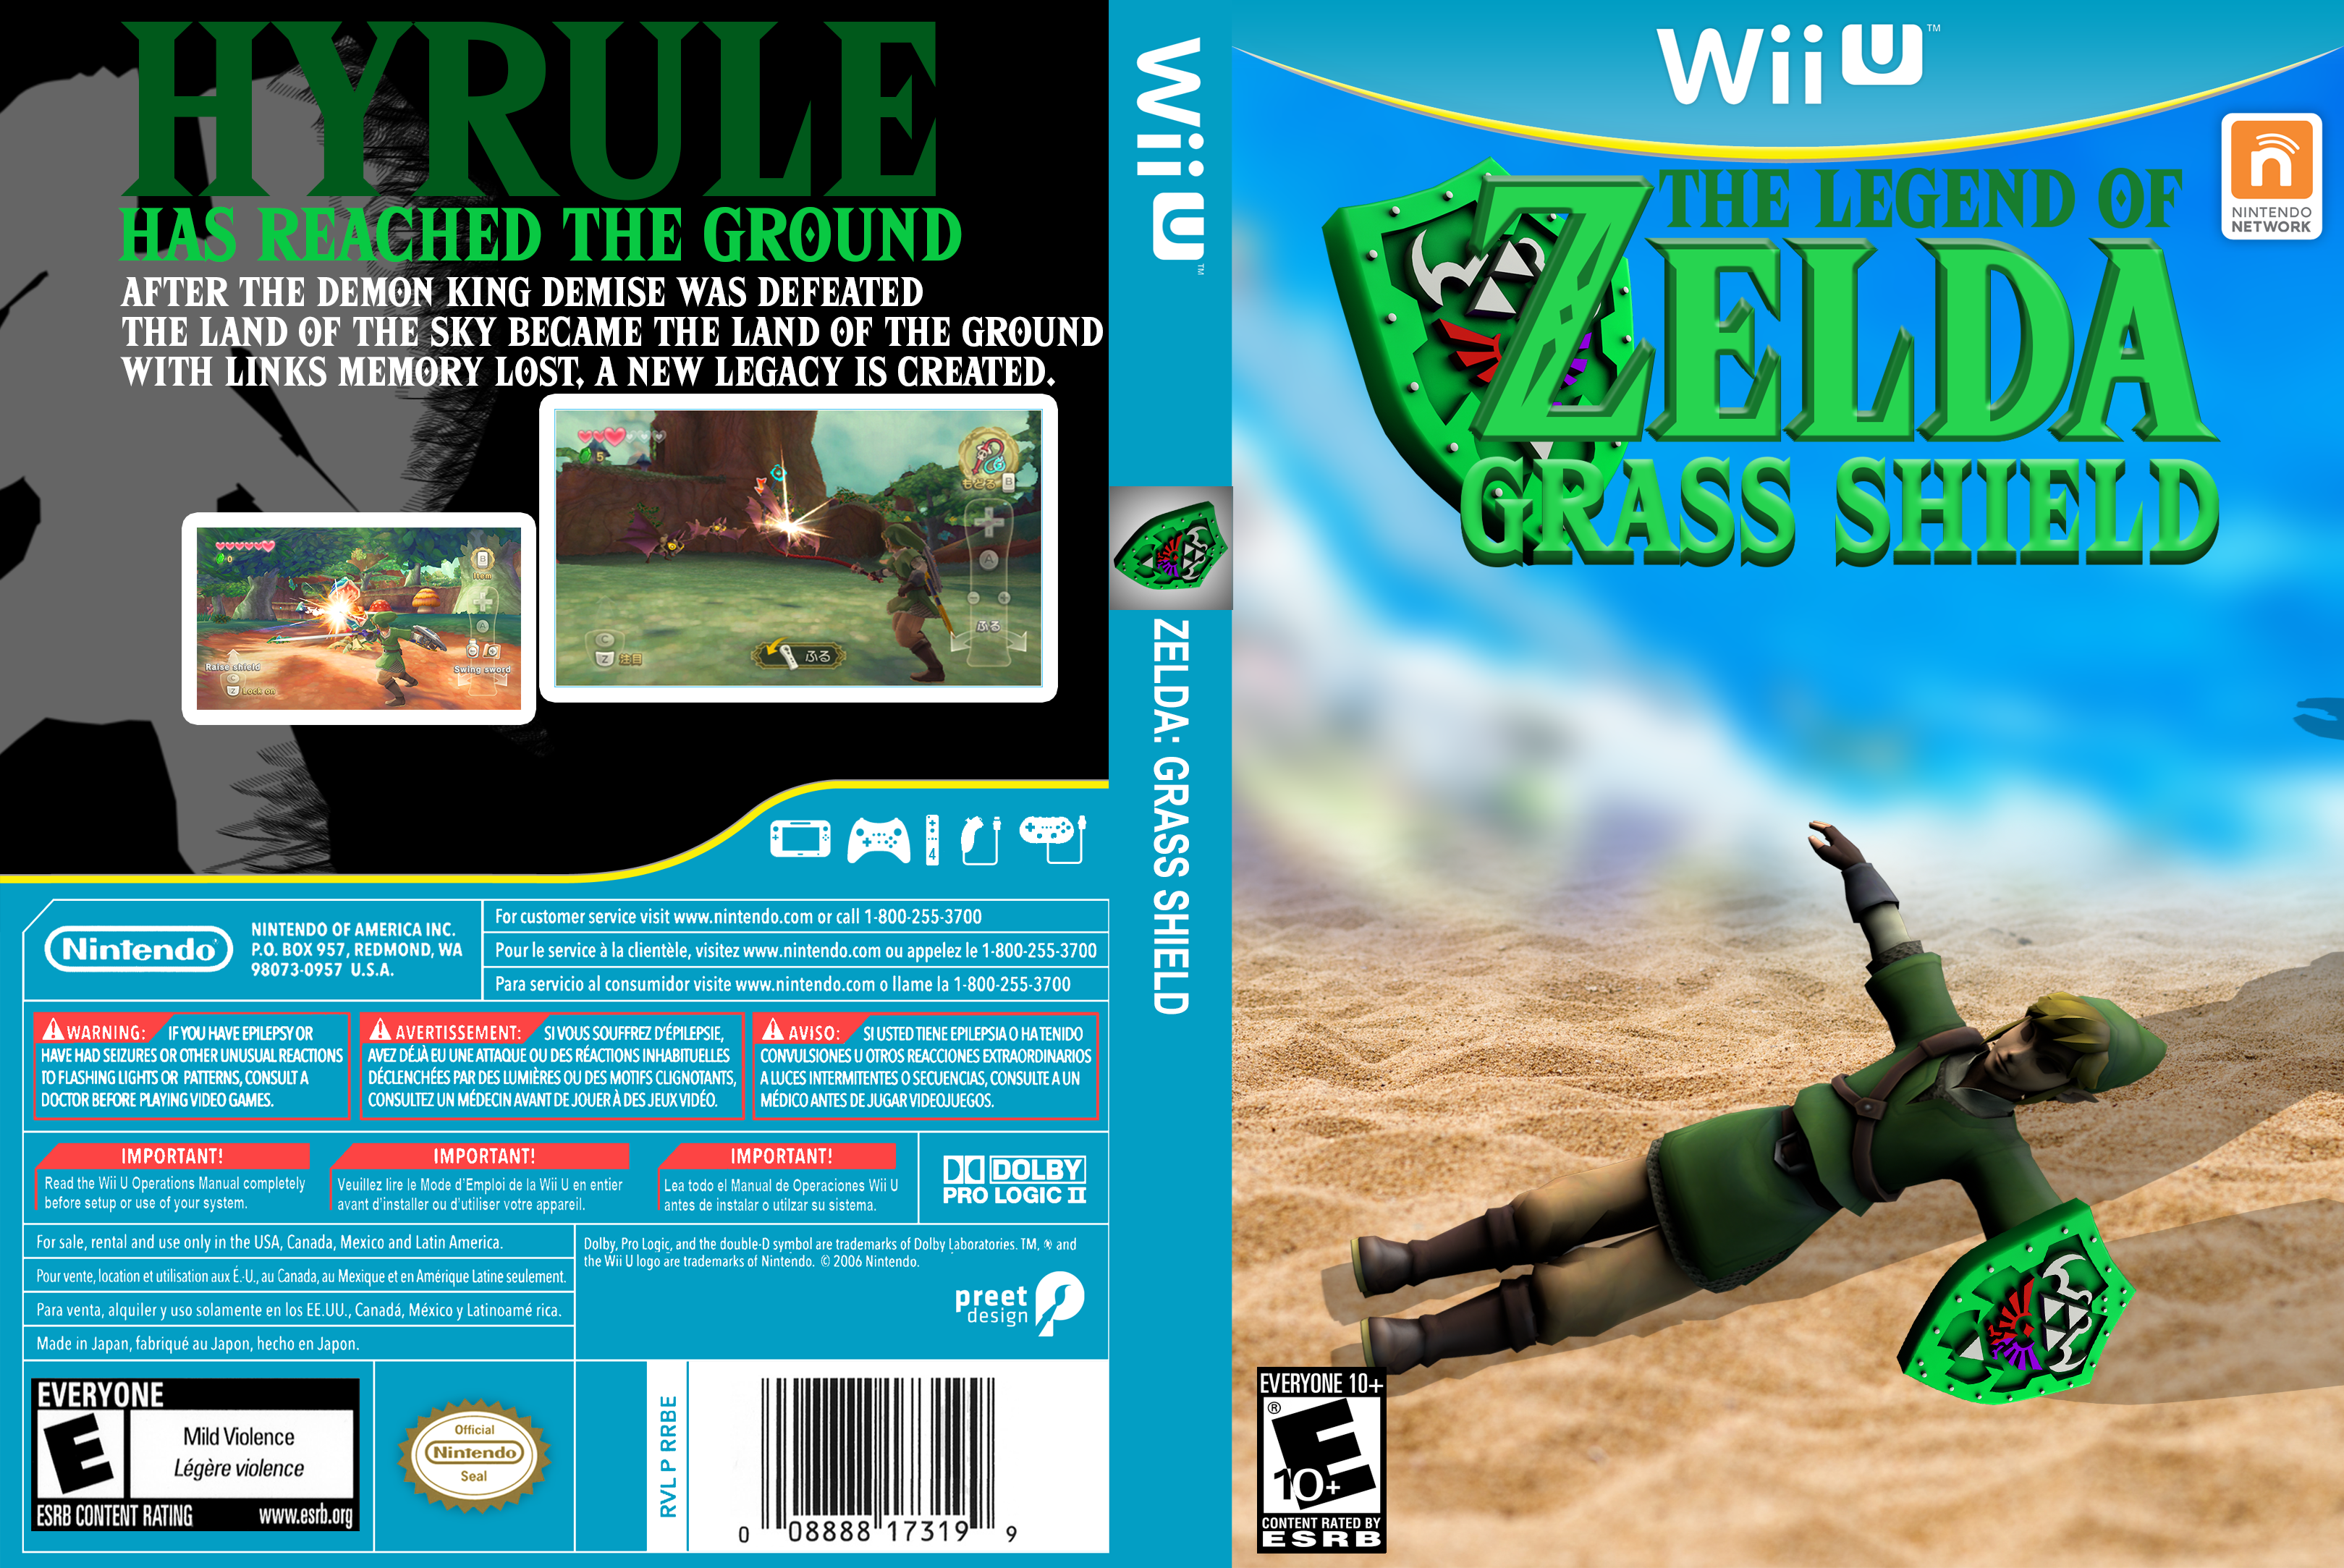 The Legend of Zelda: Grass Shield box cover